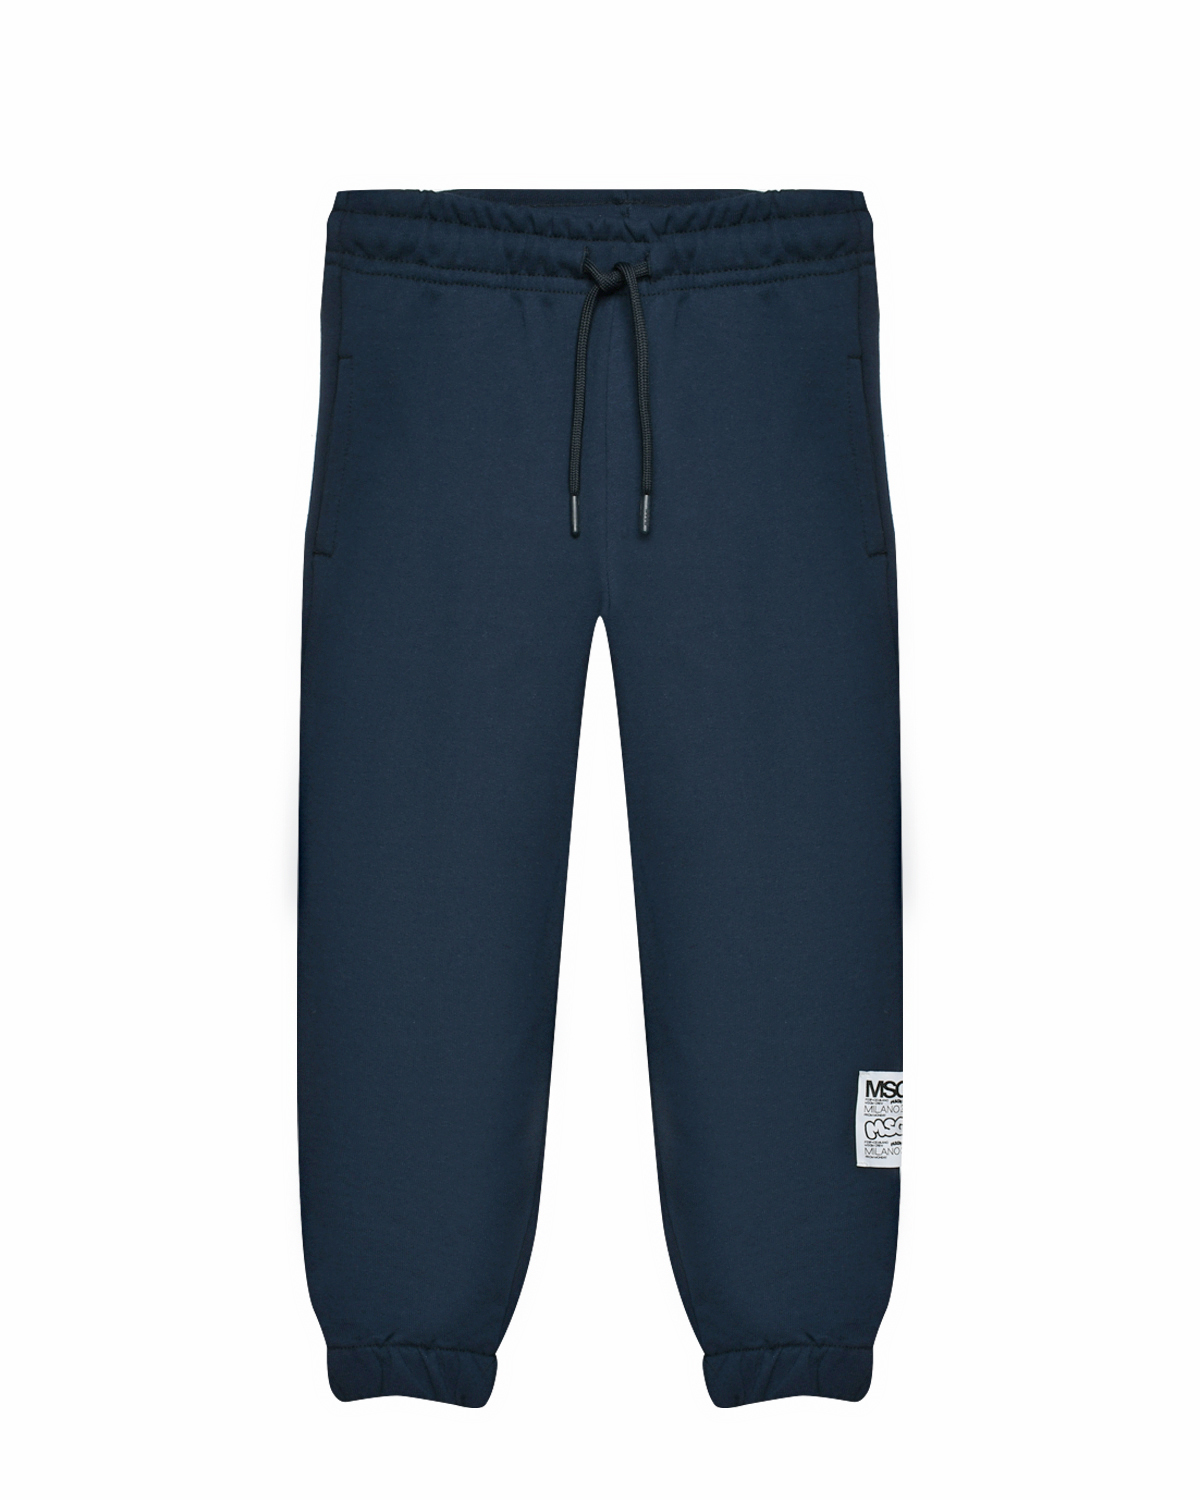 Спортивные брюки с поясом на кулиске, темно-синие MSGM, размер 140, цвет синий - фото 1